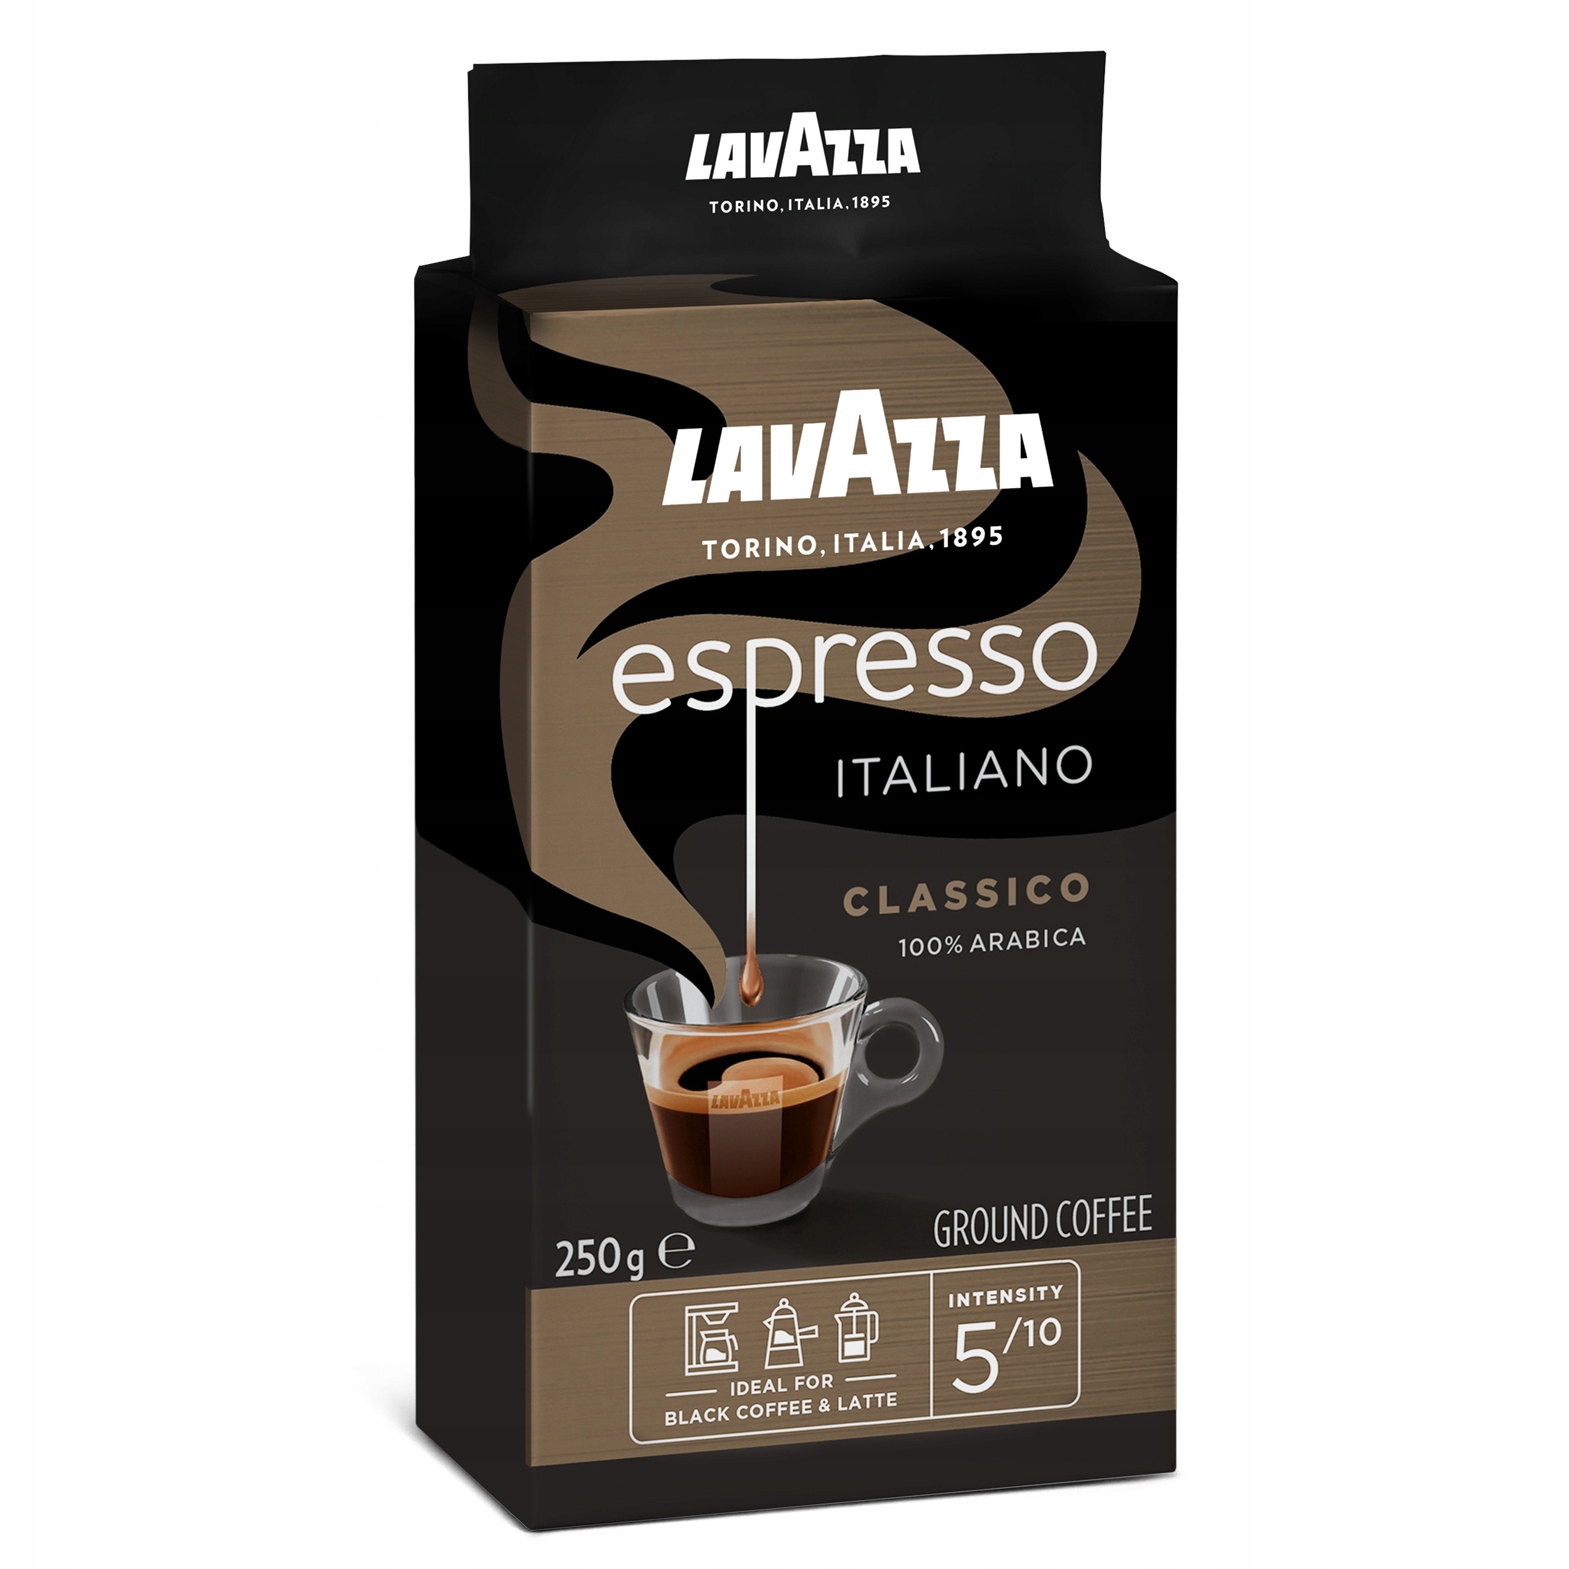 Кофе lavazza молотый 250. Кофе молотый Lavazza Espresso italiano Classico 250 г. Лавацца эспрессо молотый 250. Lavazza Espresso 250 гр. Кофе Lavazza молотый Espresso 250.